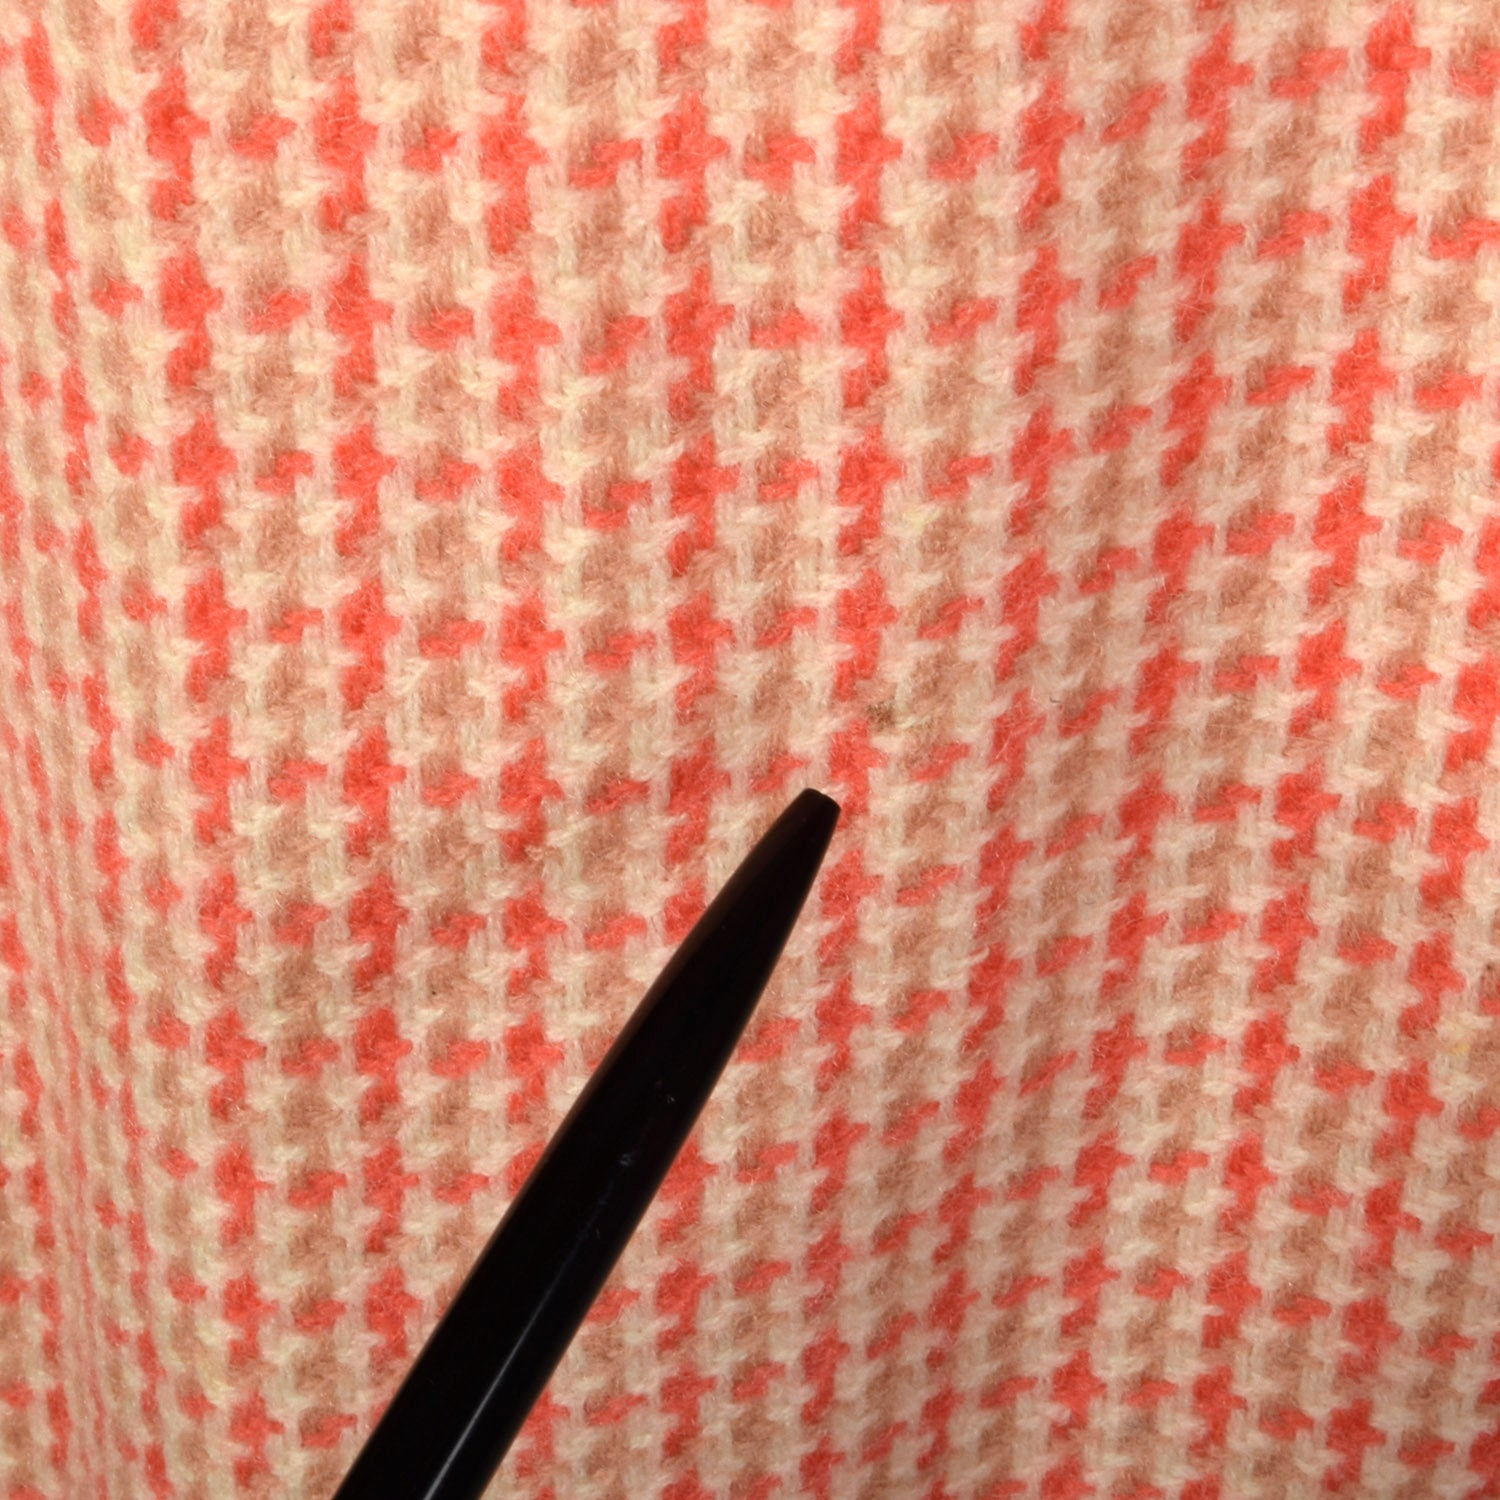 XS 1950s Pink Tweed Pencil Skirt